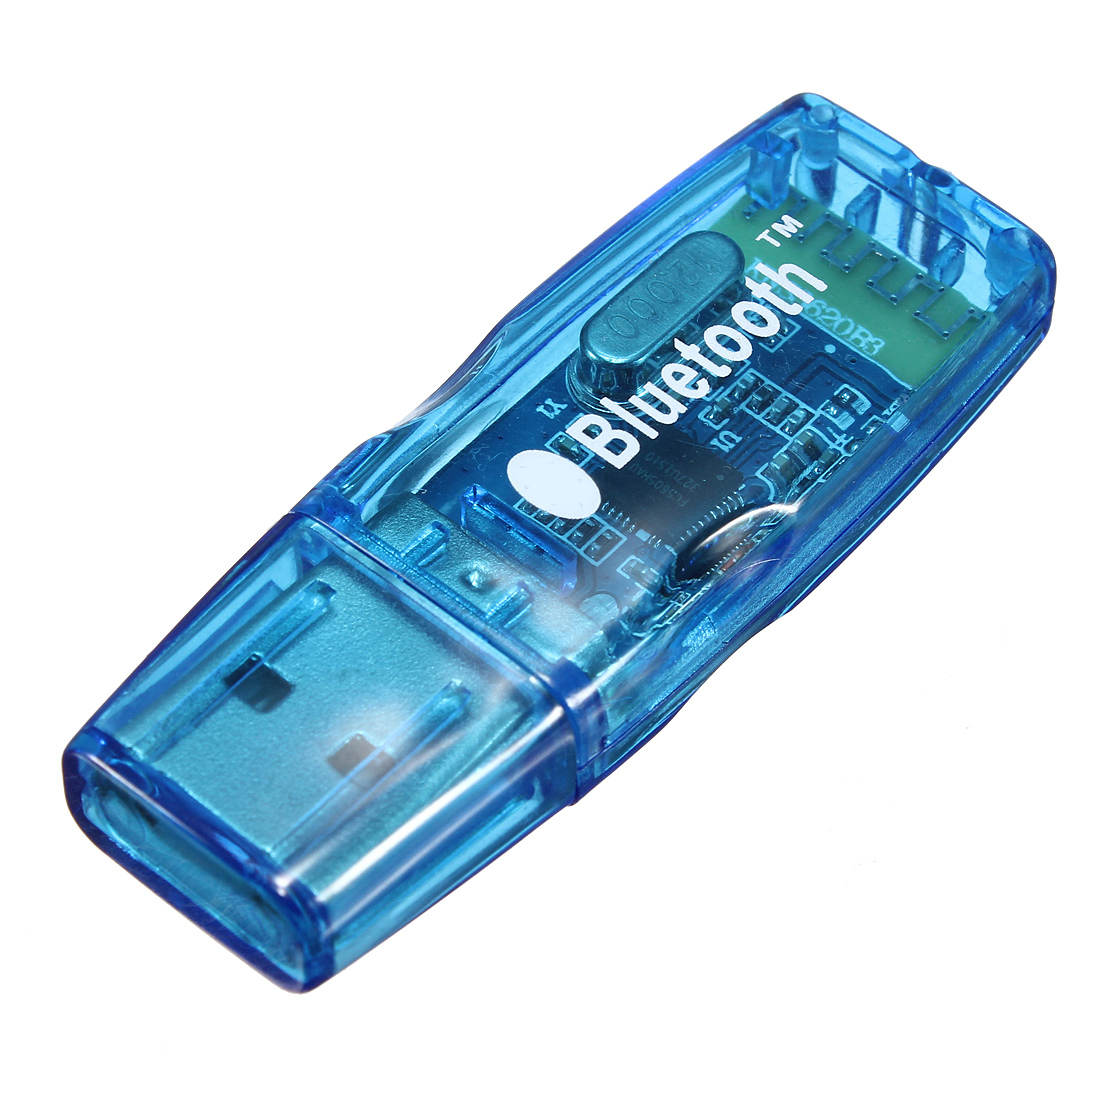 Bluetooth адаптер c. Bluetooth адаптер Dongle USB 2.0. Avalanche Bluetooth адаптер. Мини USB Bluetooth адаптер v 2,0. Bluetooth адаптер neodrive Bluetooth 2.0.